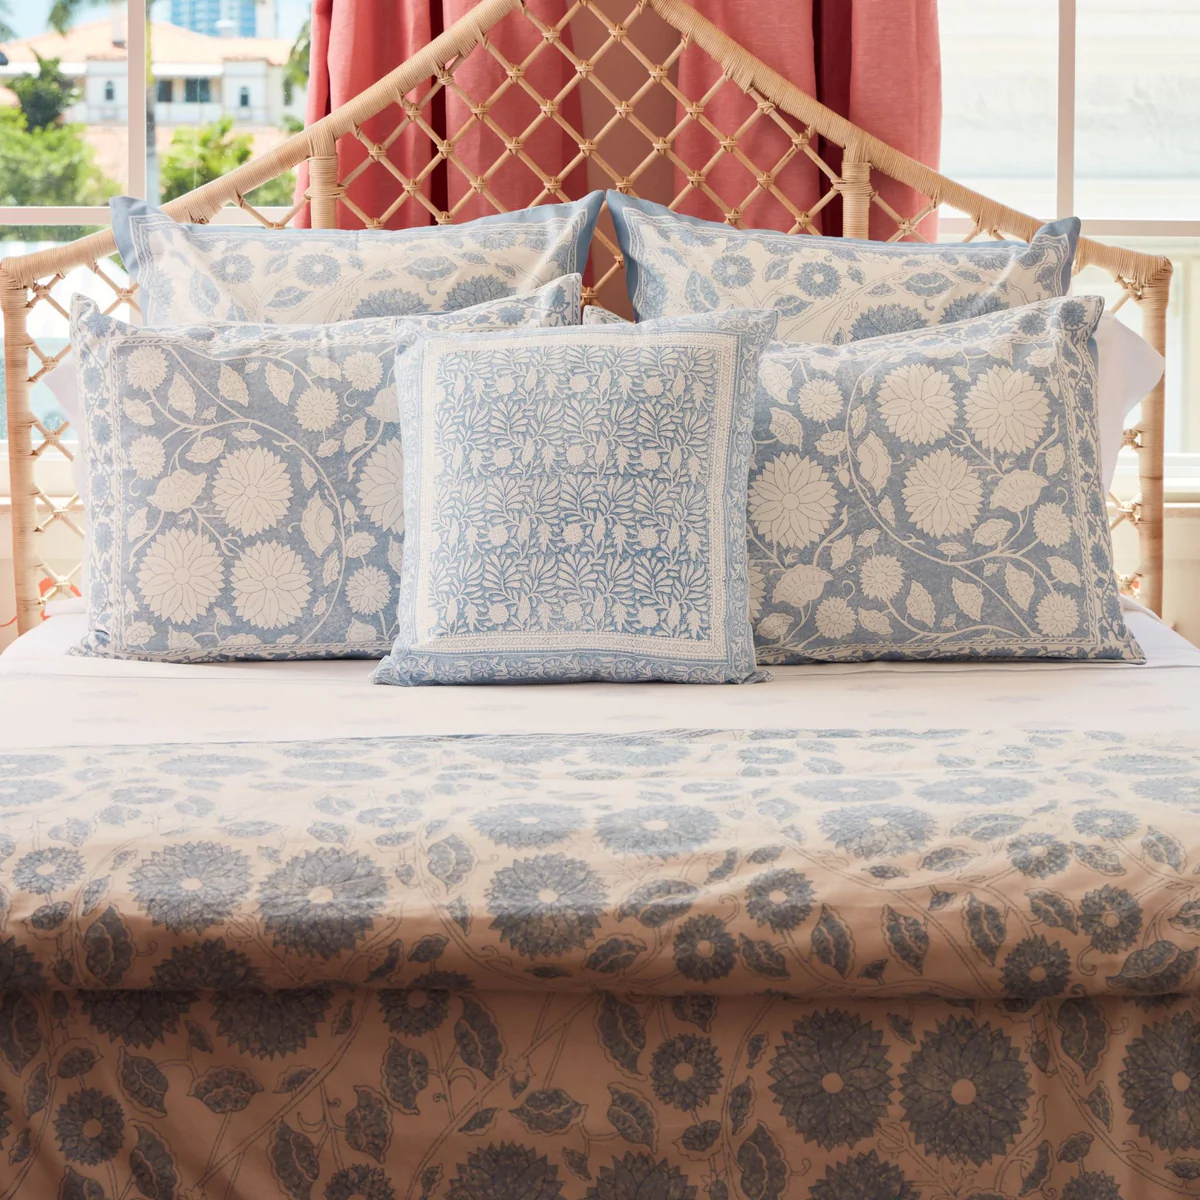 Calypso Linens  - amanda lindroth- bedding - blue and white bedding